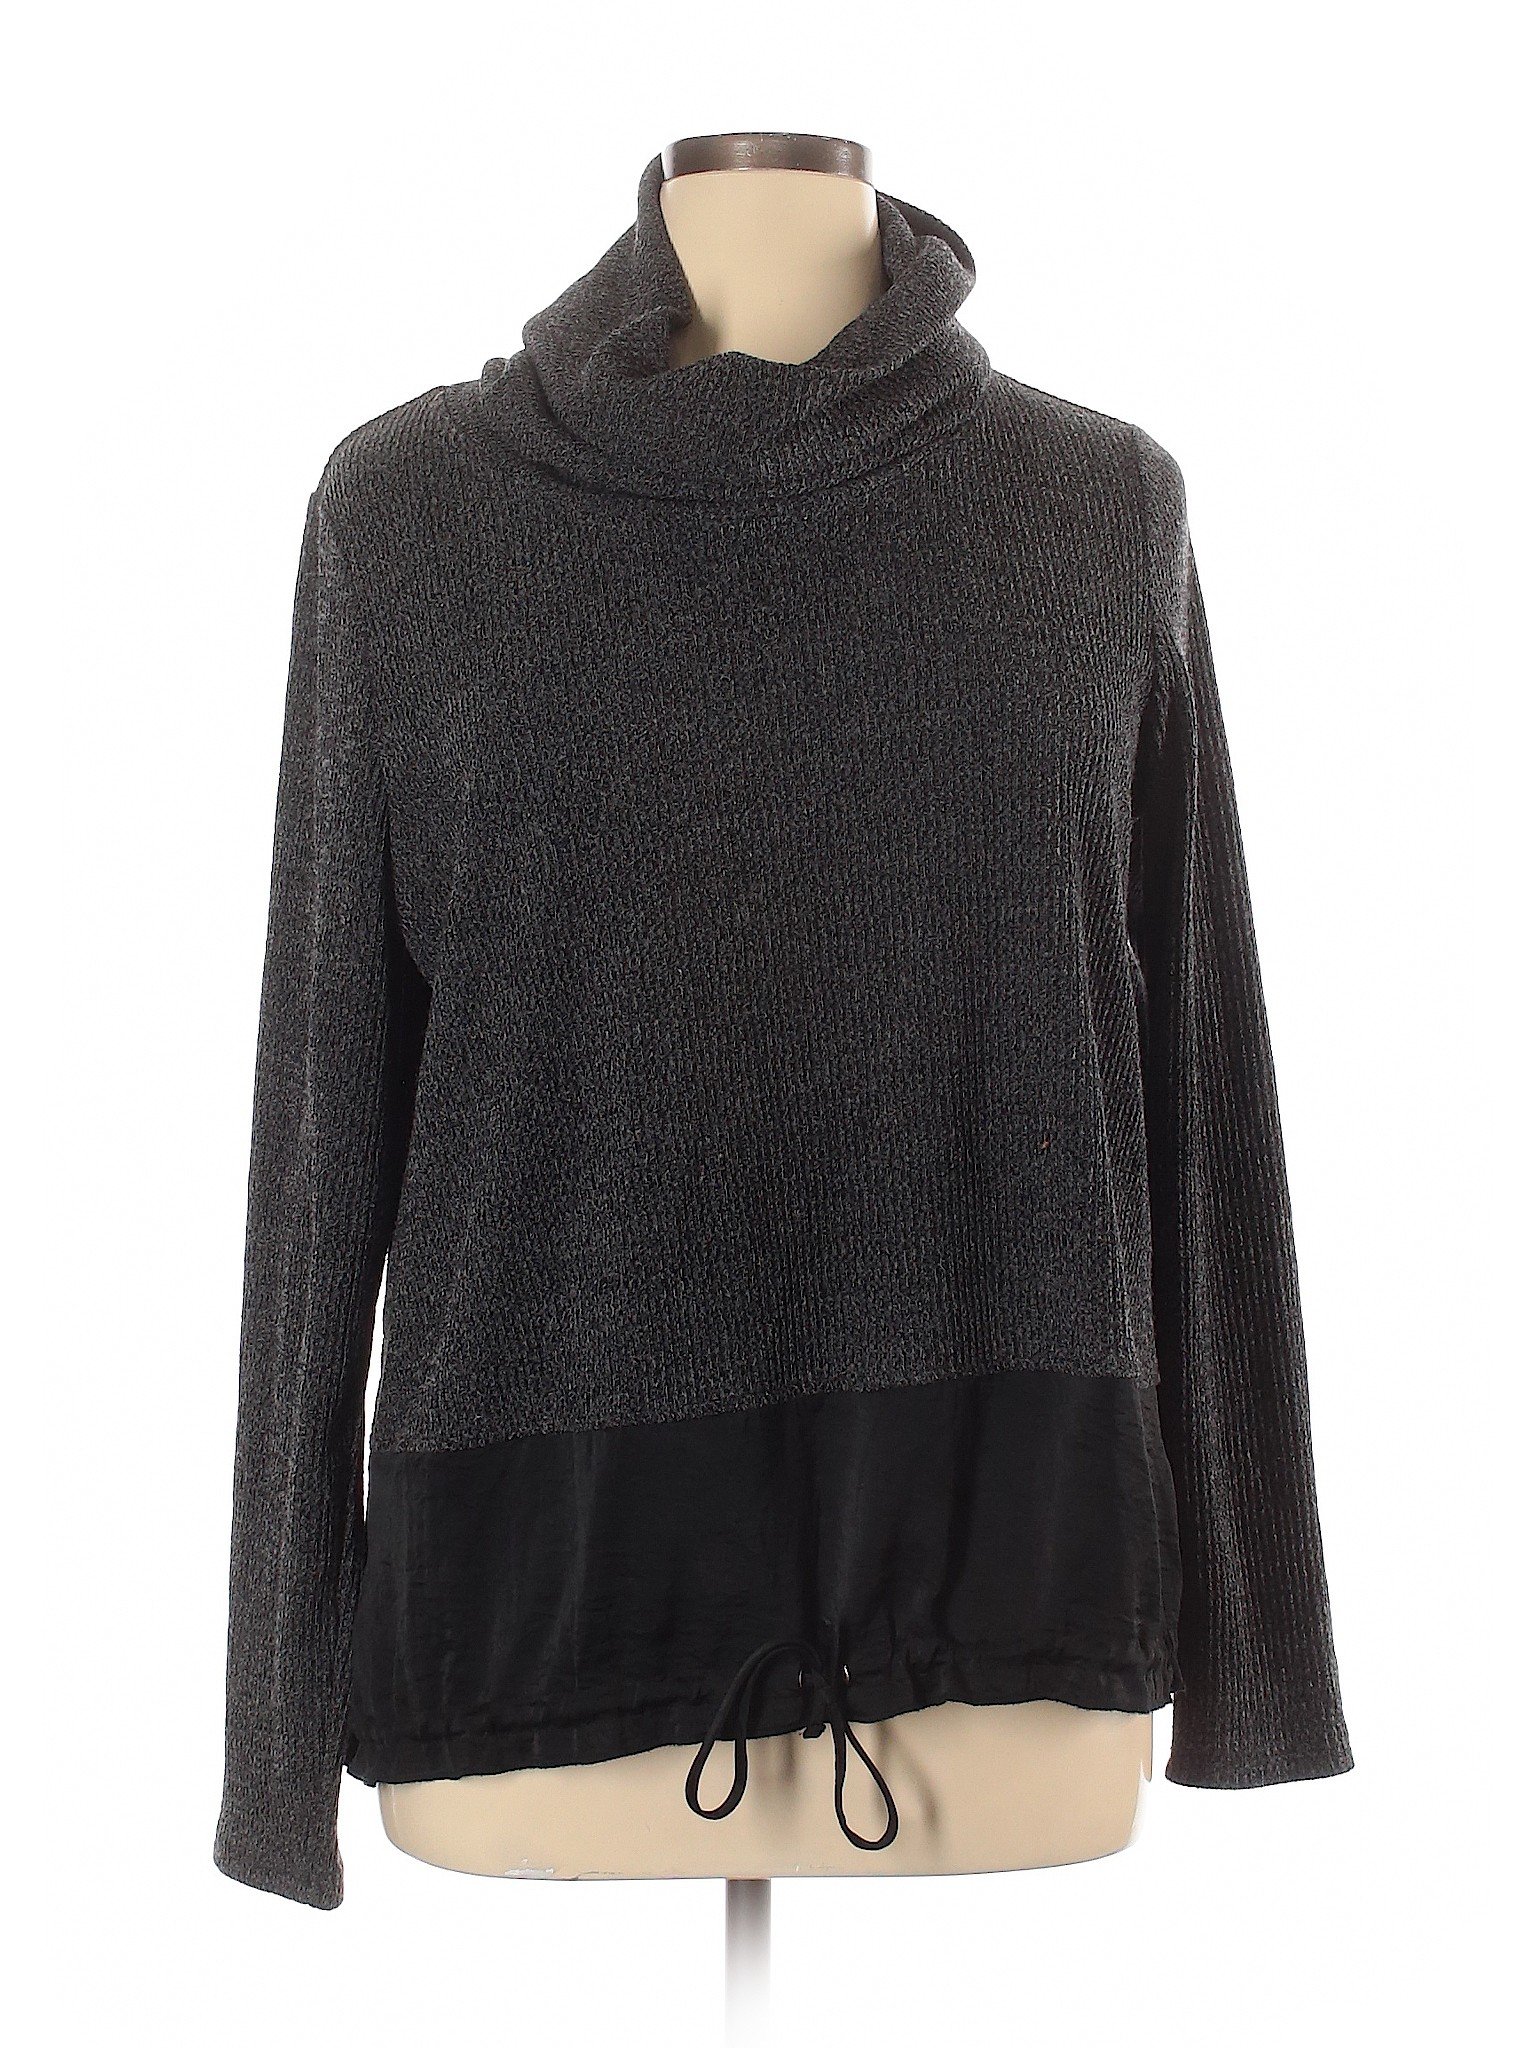 Simply Vera Vera Wang Women Gray Pullover Sweater XL | eBay